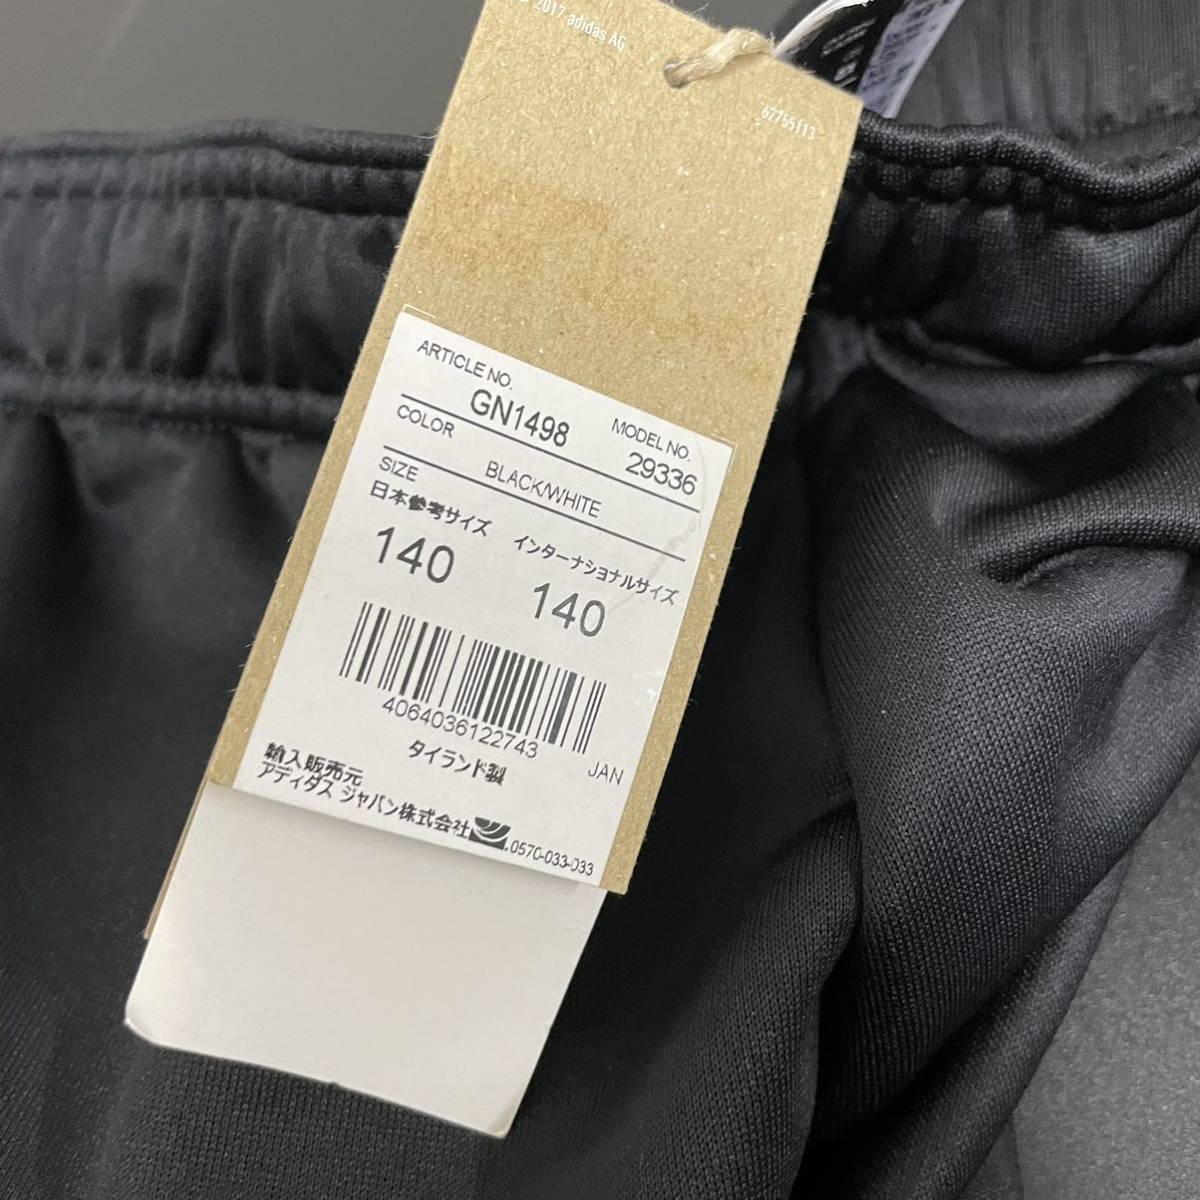  new goods unused Adidas jersey pants size 140 Kids 